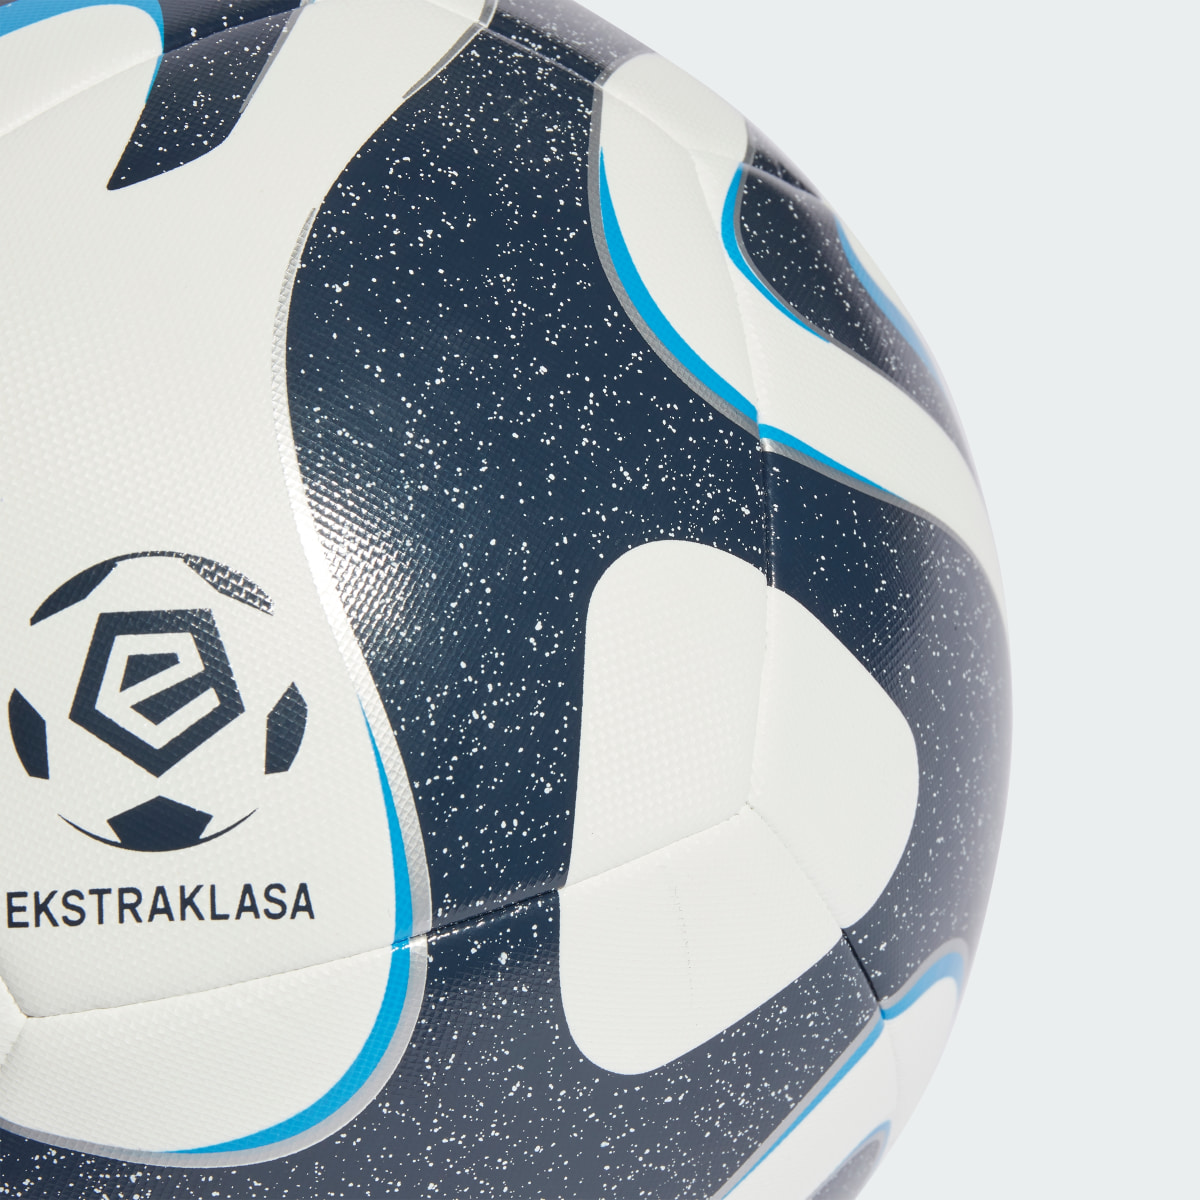 Adidas Ekstraklasa Training Football. 4